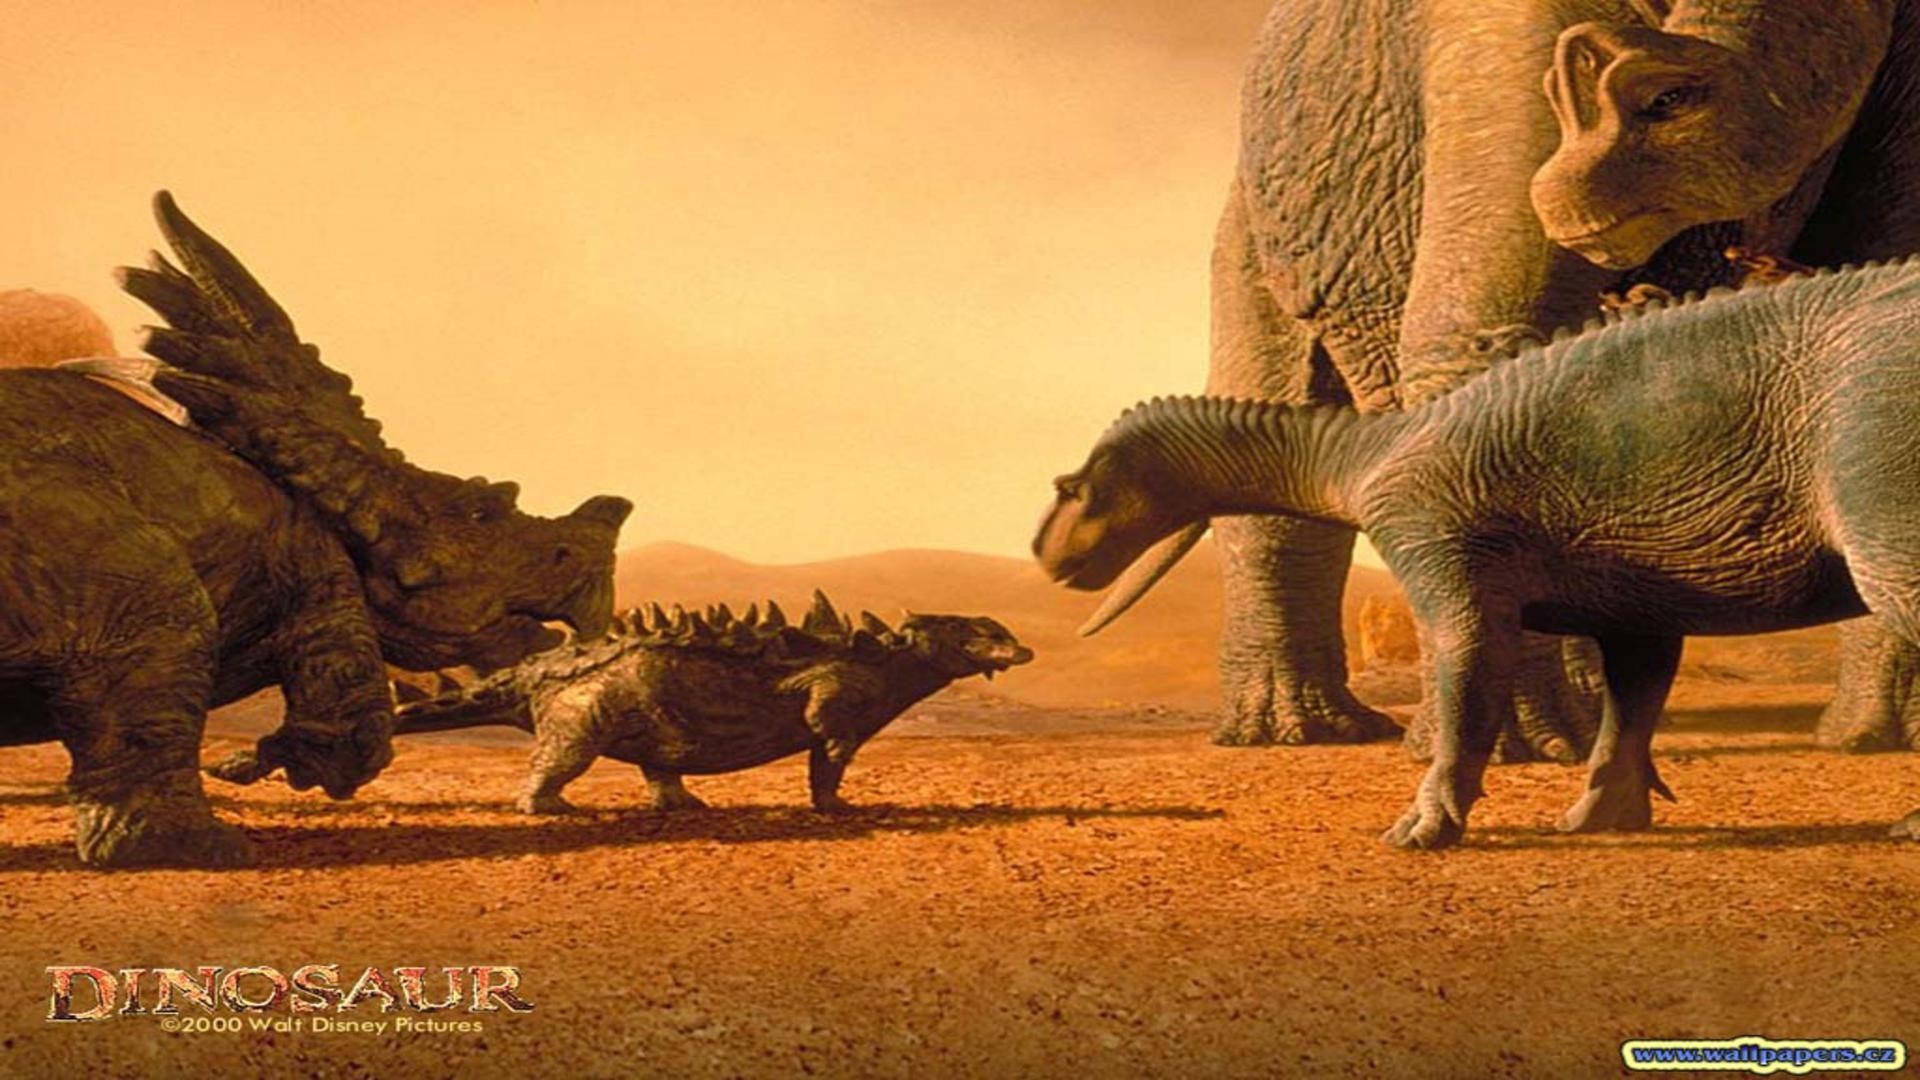 Dinosaur Wallpaper Scenic Free Desktop Background - Live Action Land Before Time - HD Wallpaper 